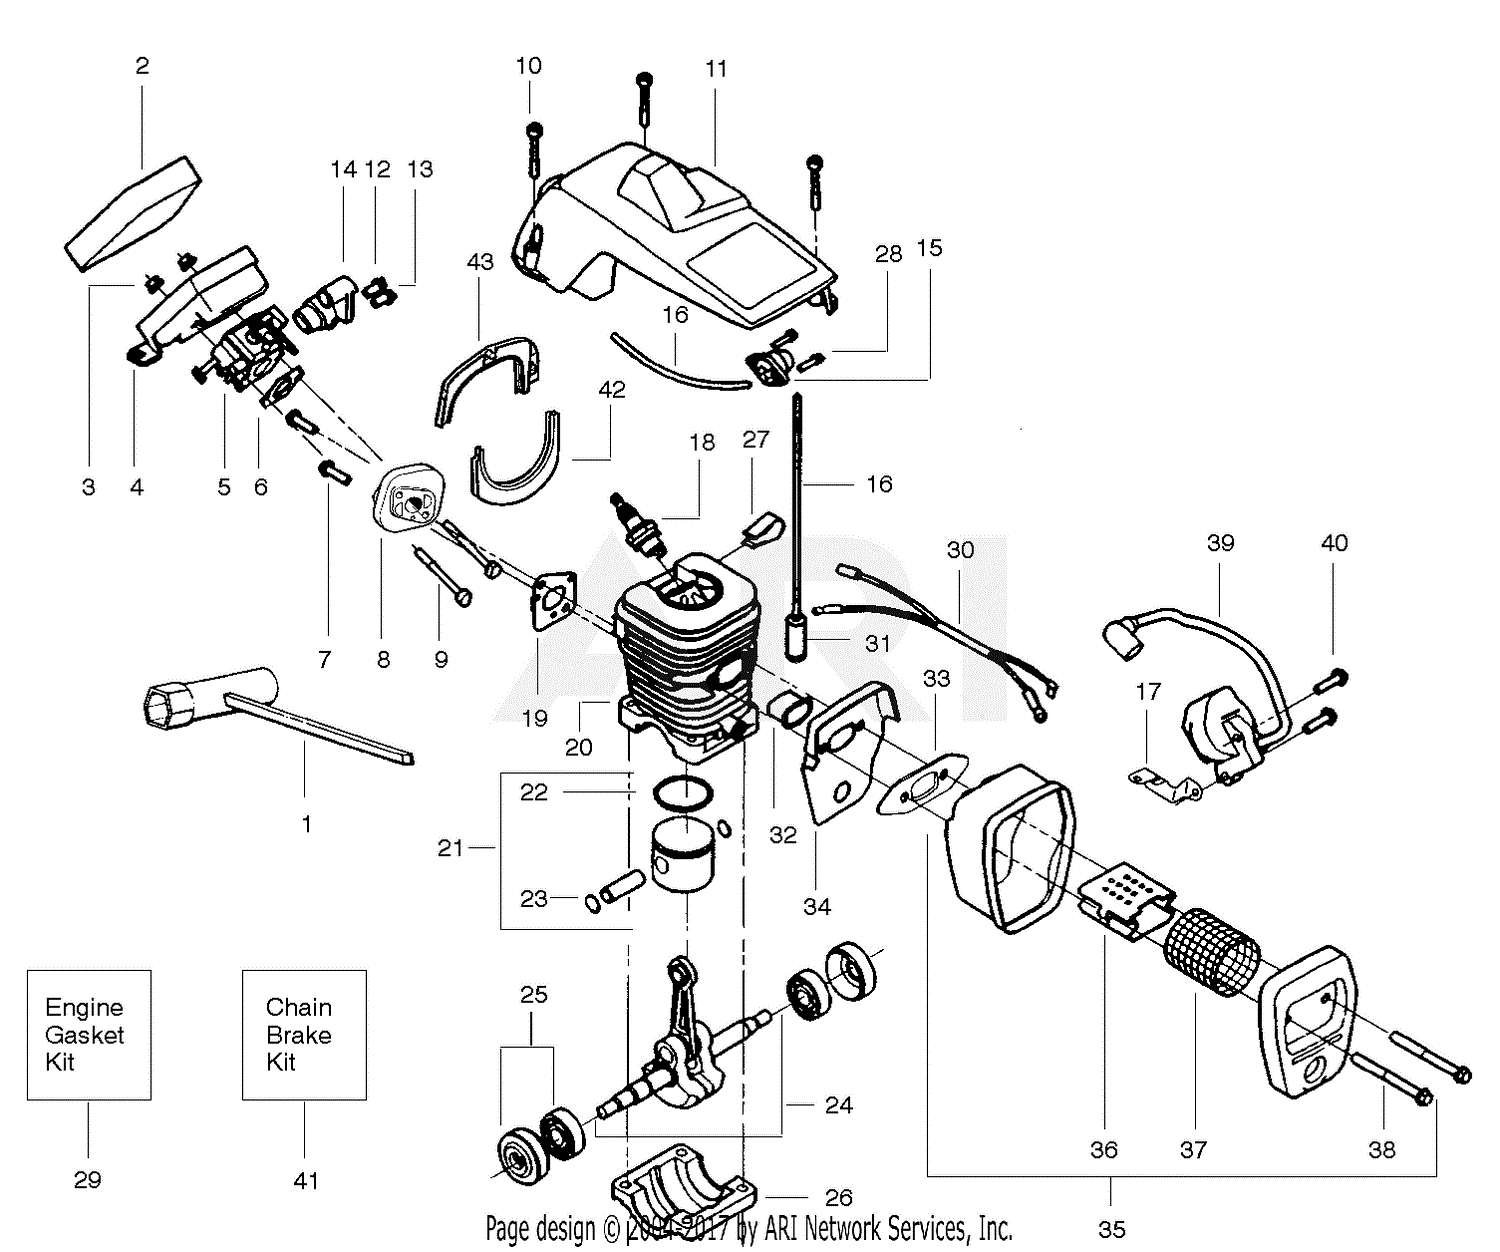 Poulan CRAFTSMAN 358.351162 Gas Chain Saw Parts Diagram ... echo tiller wiring diagram 